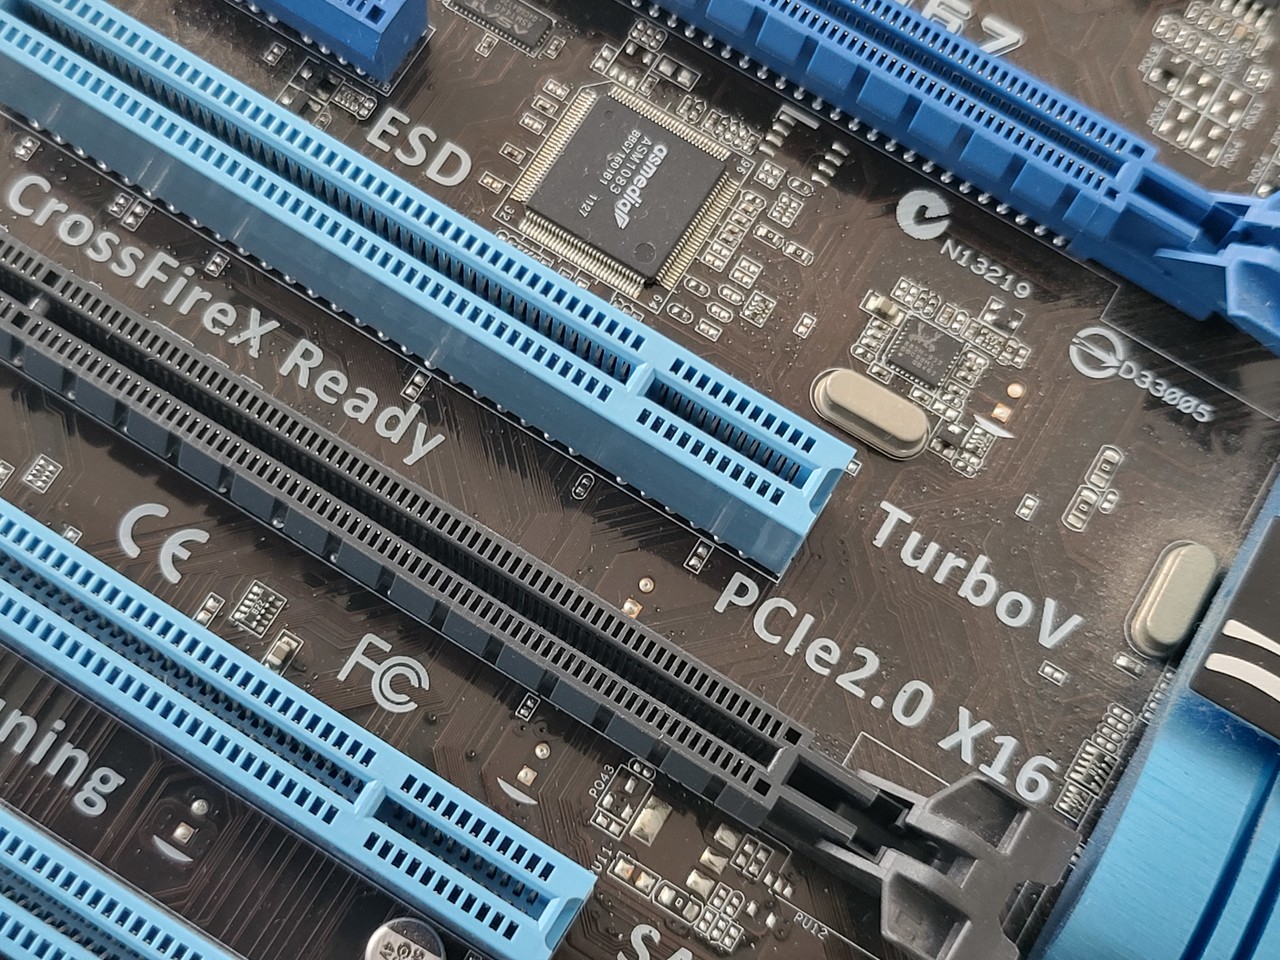 ▲ PCIe 2.0 x16이 눈에 띈다